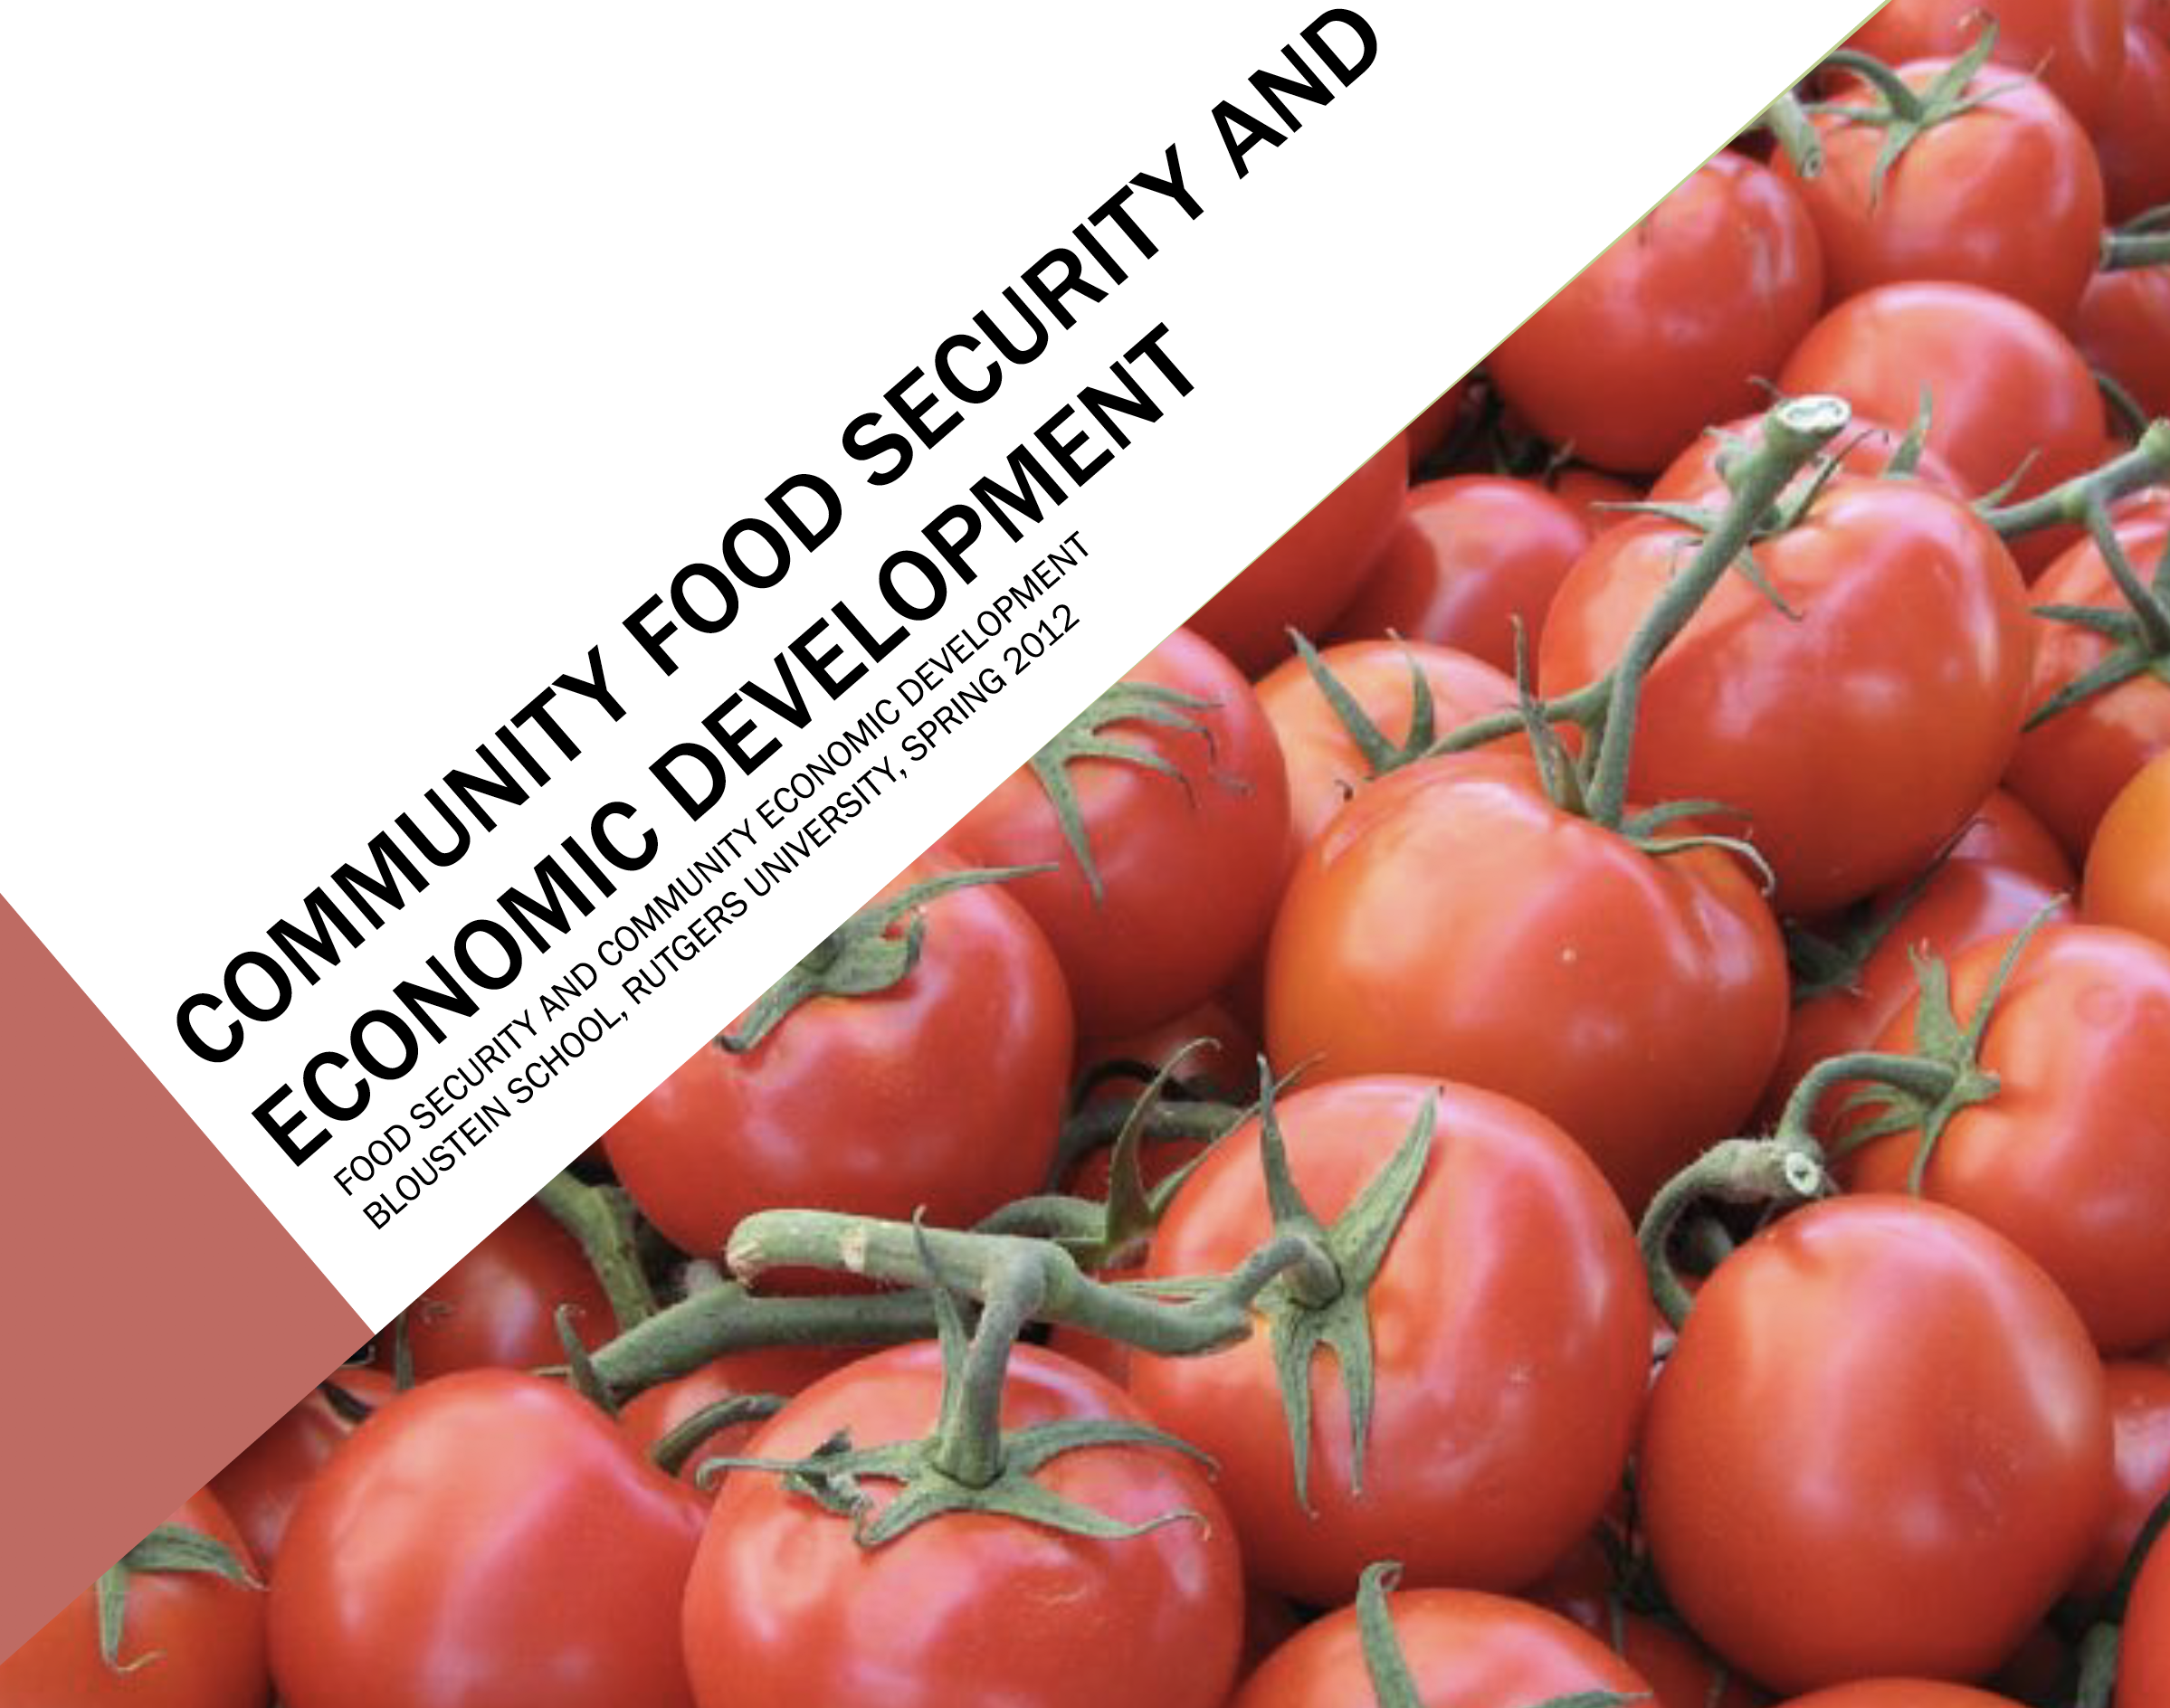 Community Food Security and Economic Development